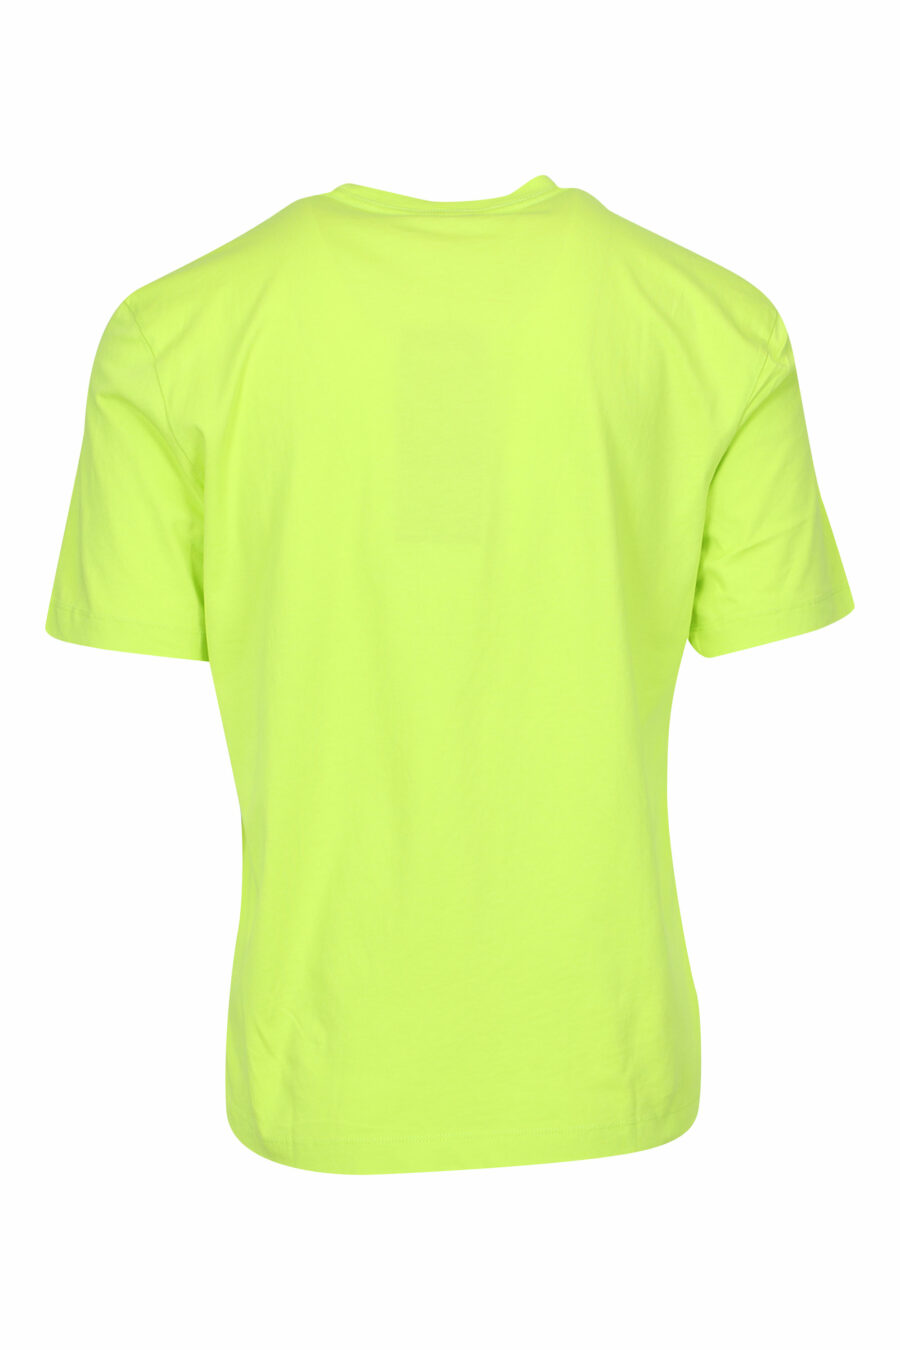 Camiseta amarilla con minilogo escudo - 8058610829339 1